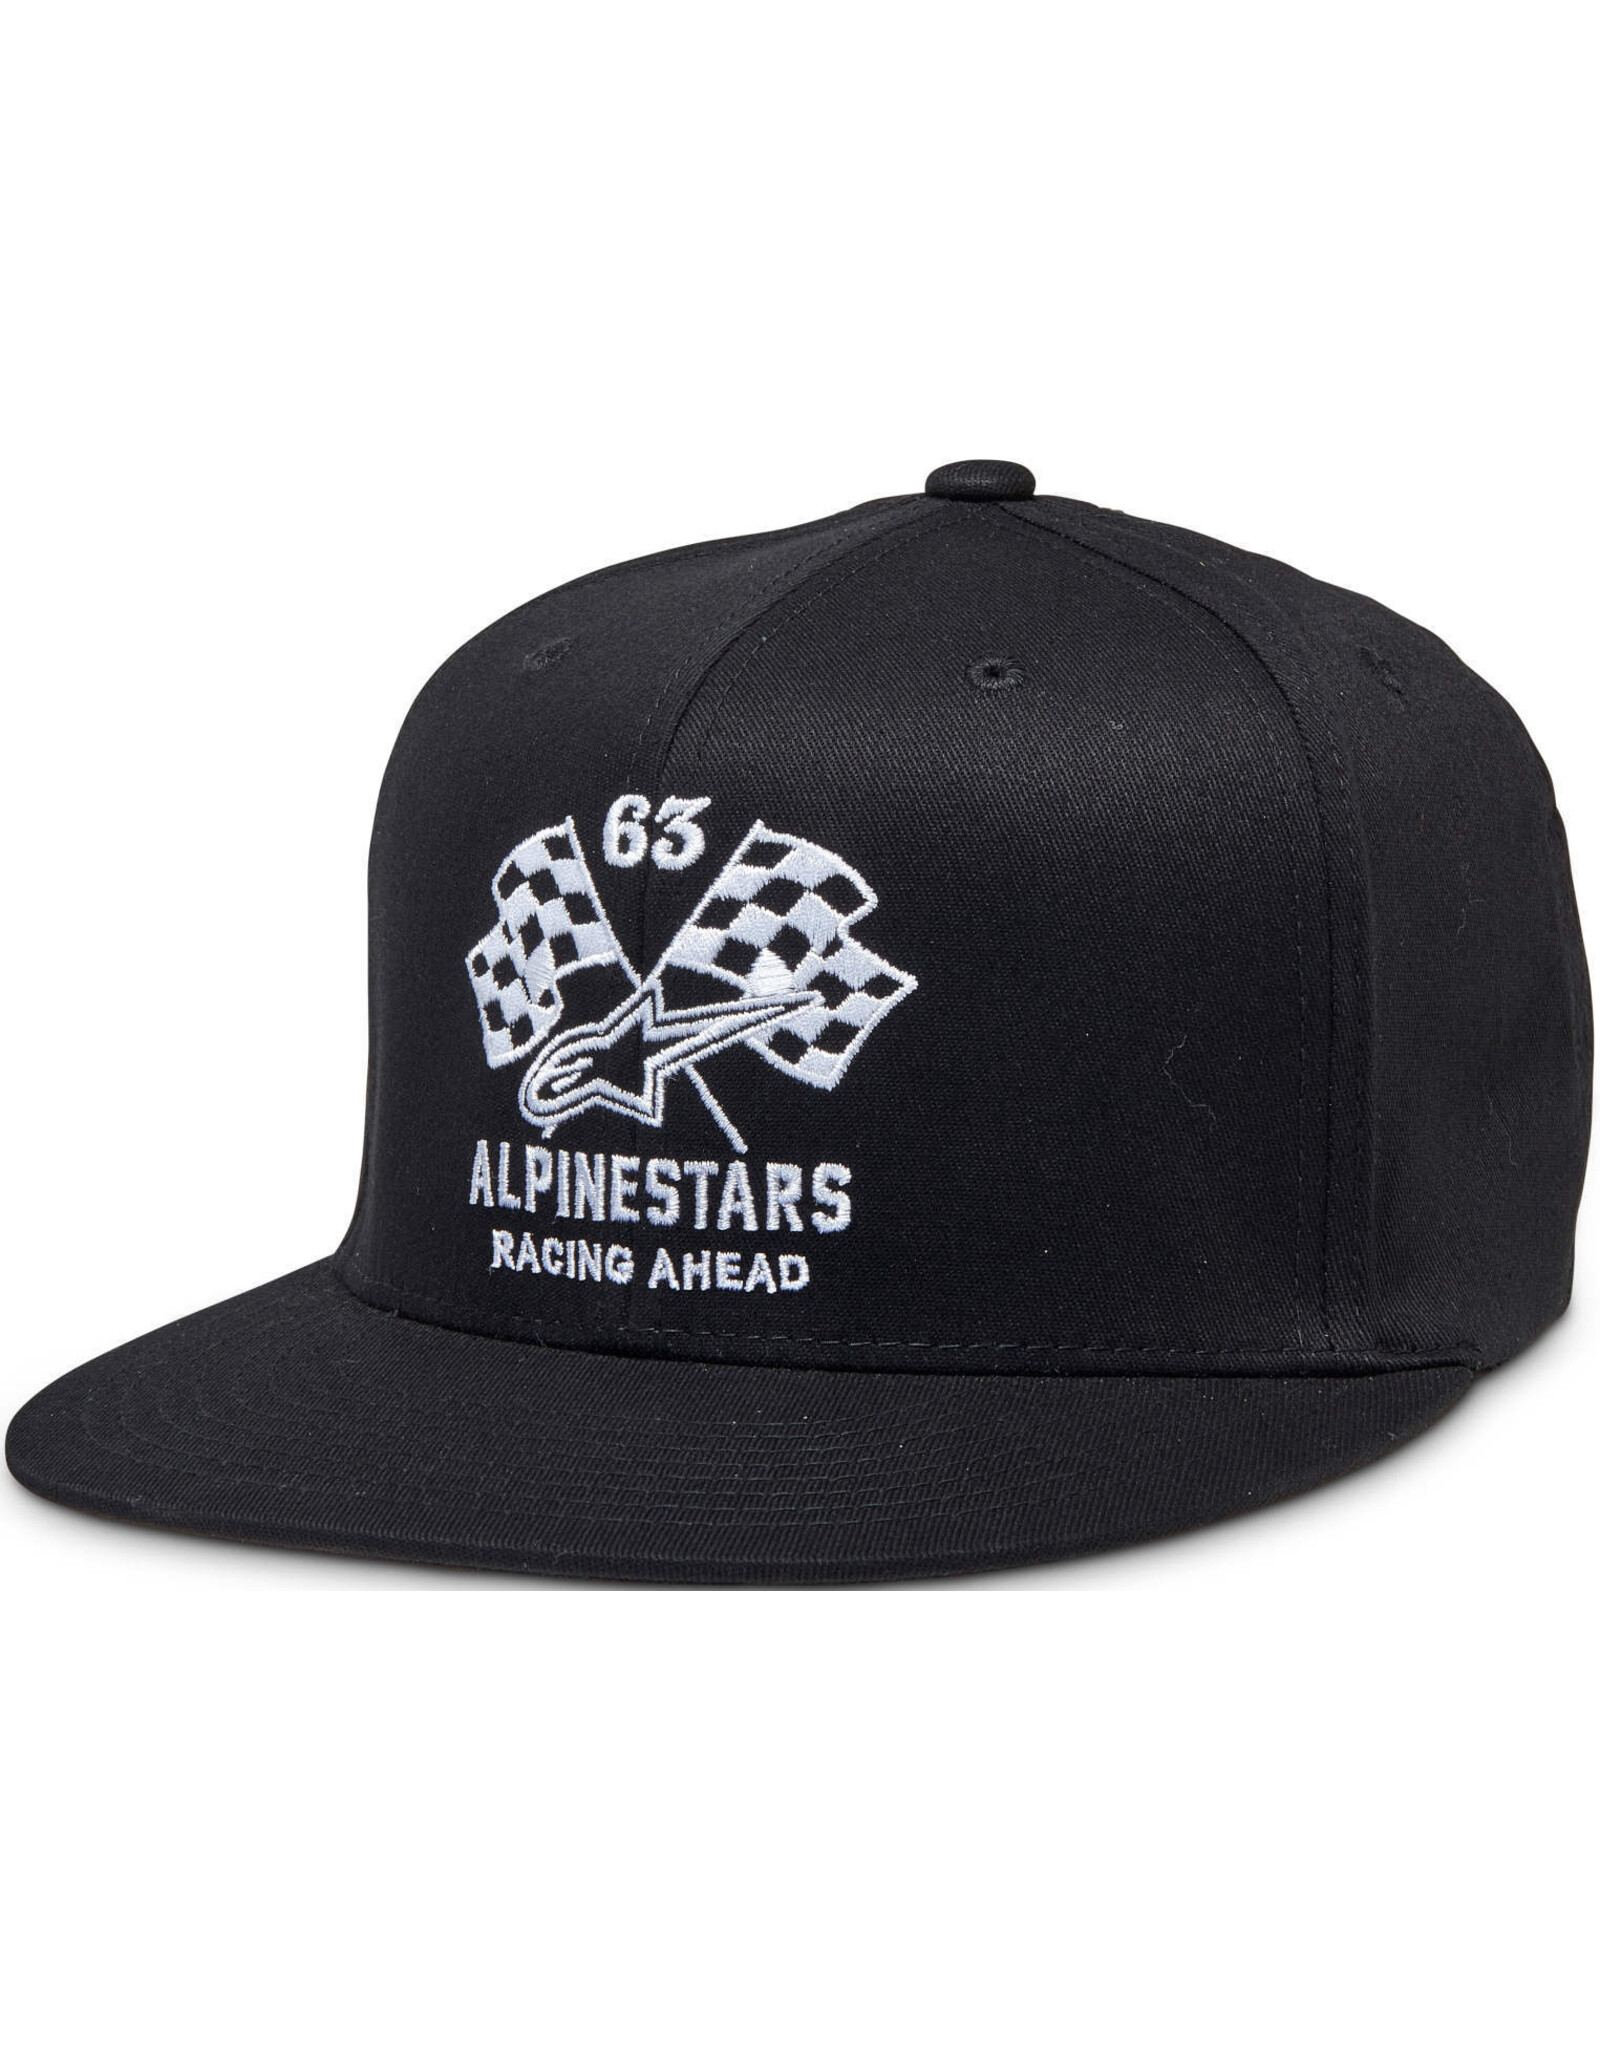 Alpinestars Alpinestars double check flatbill hat black / white